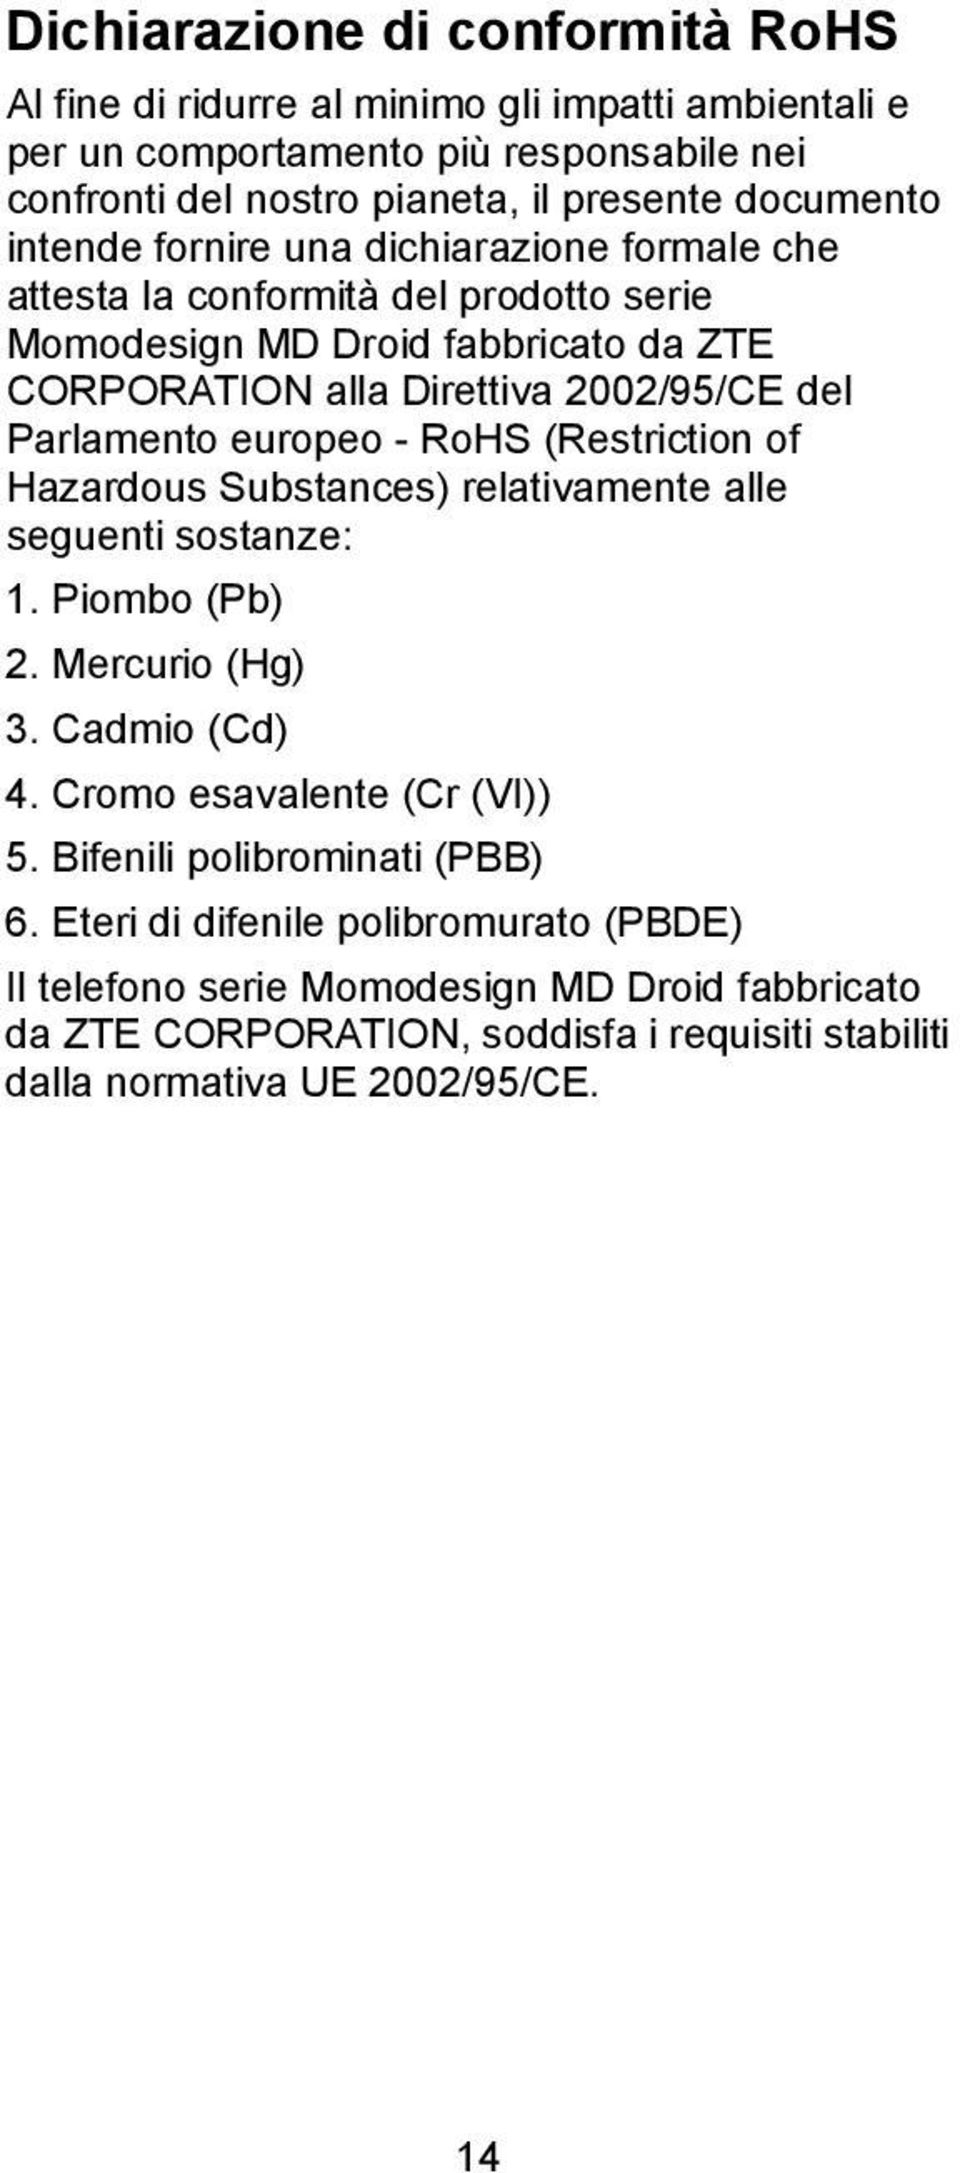 europeo - RoHS (Restriction of Hazardous Substances) relativamente alle seguenti sostanze: 1. Piombo (Pb) 2. Mercurio (Hg) 3. Cadmio (Cd) 4. Cromo esavalente (Cr (VI)) 5.